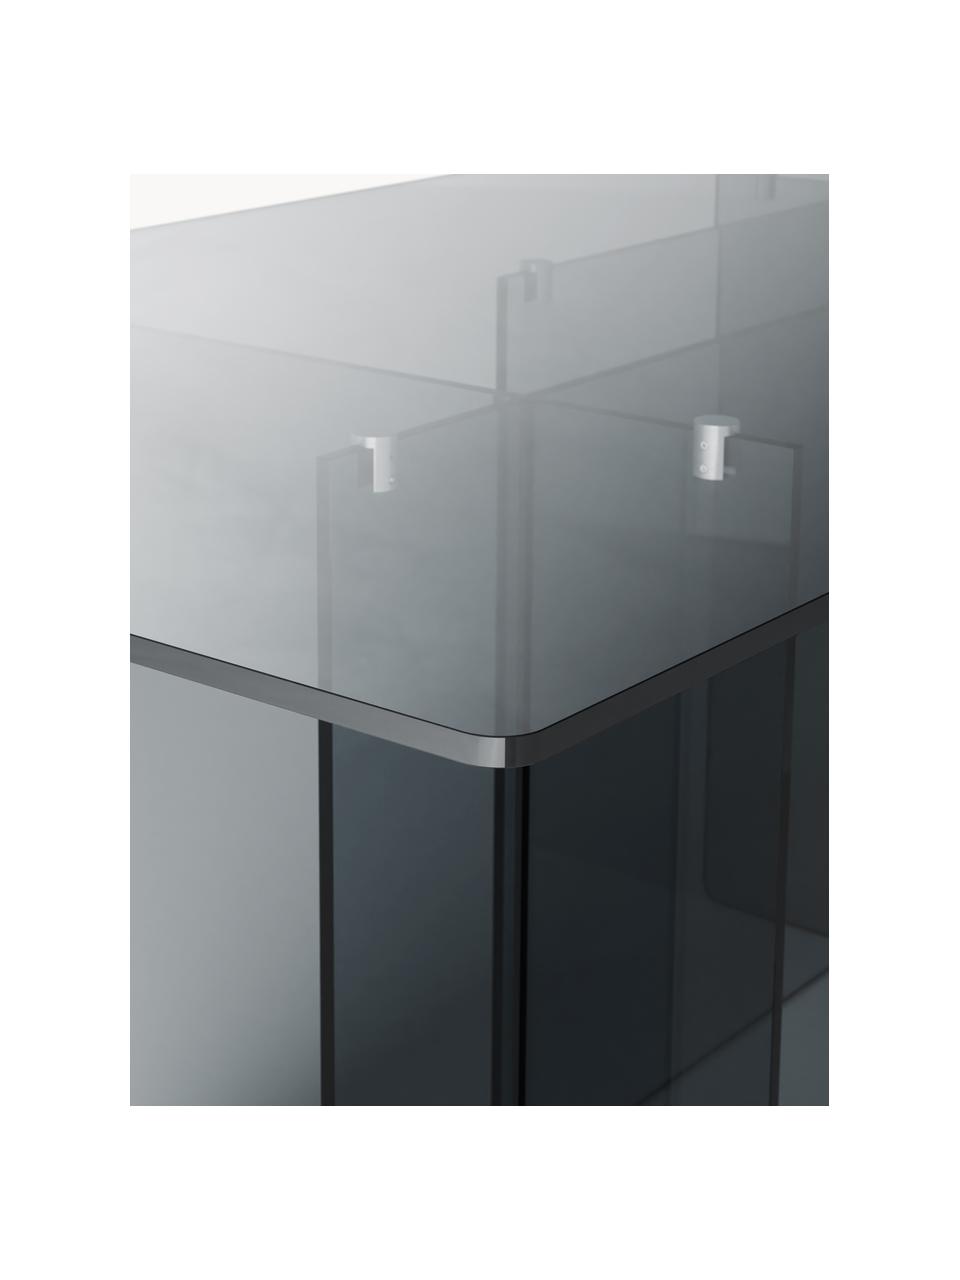 Glas-Esstisch Anouk, 180 x 90 cm, Glas, Grau, transparent, B 180 x T 90 cm